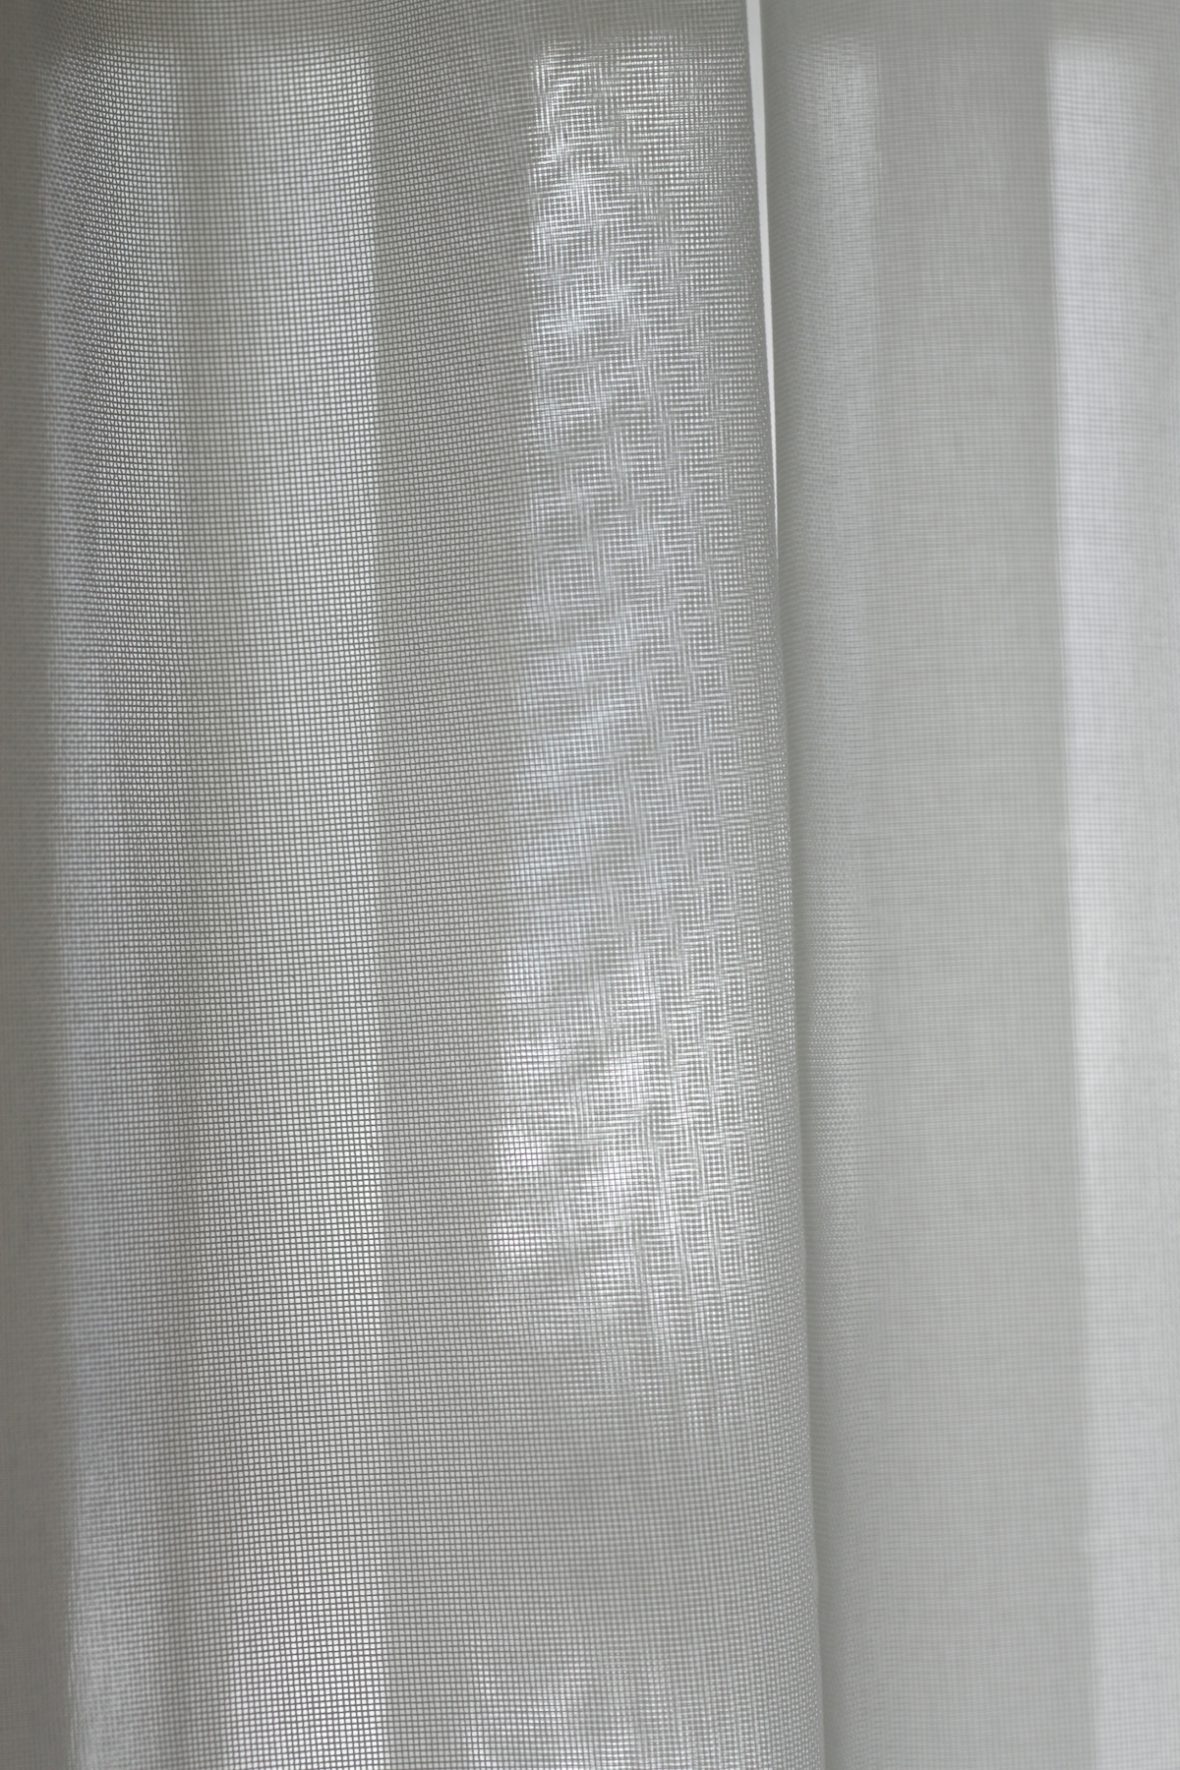 Privacy, 2008, Pigmentprint, 90x60cm